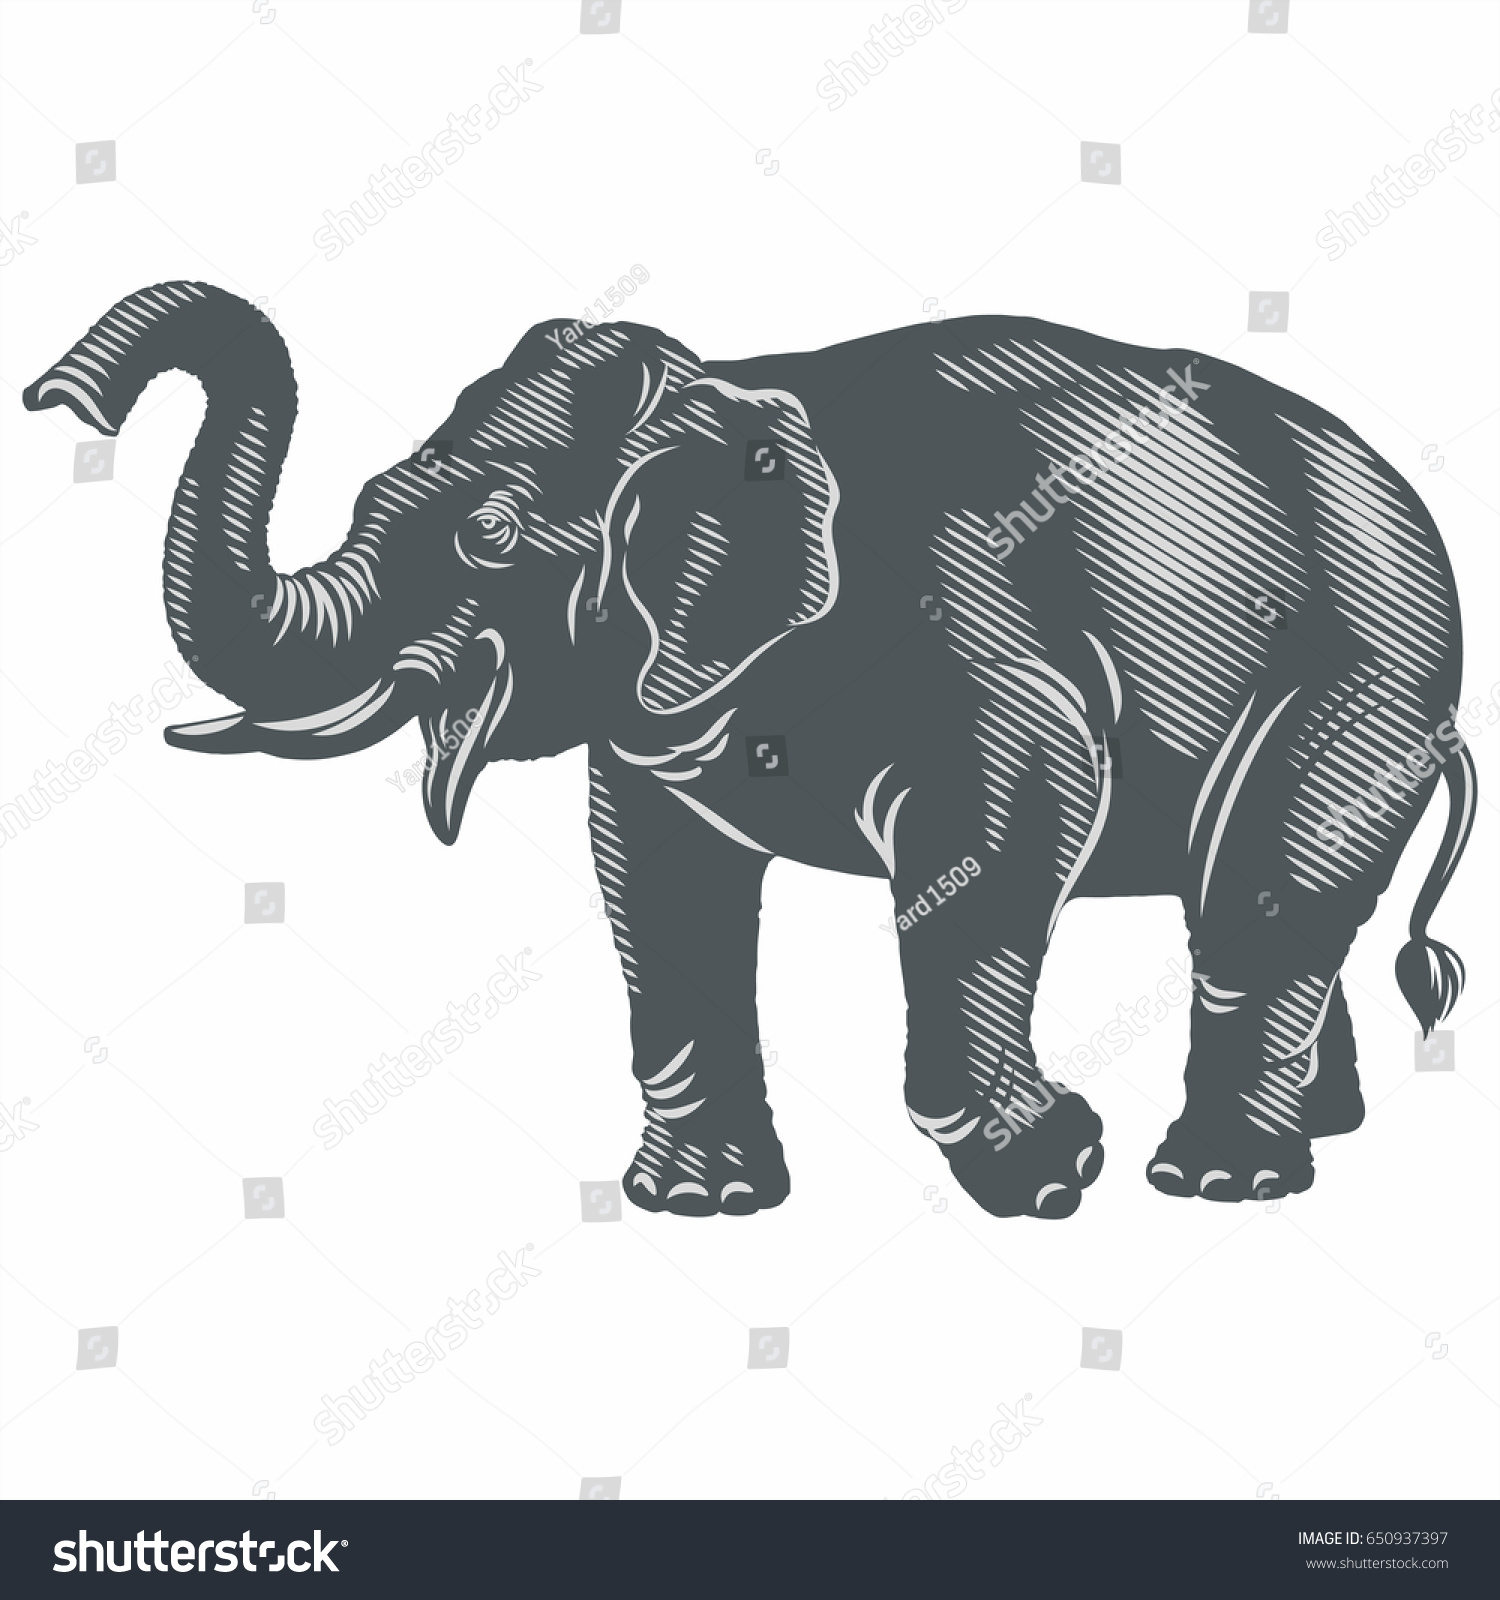 Indian Elephant Illustration Stock Illustration 650937397 - Shutterstock